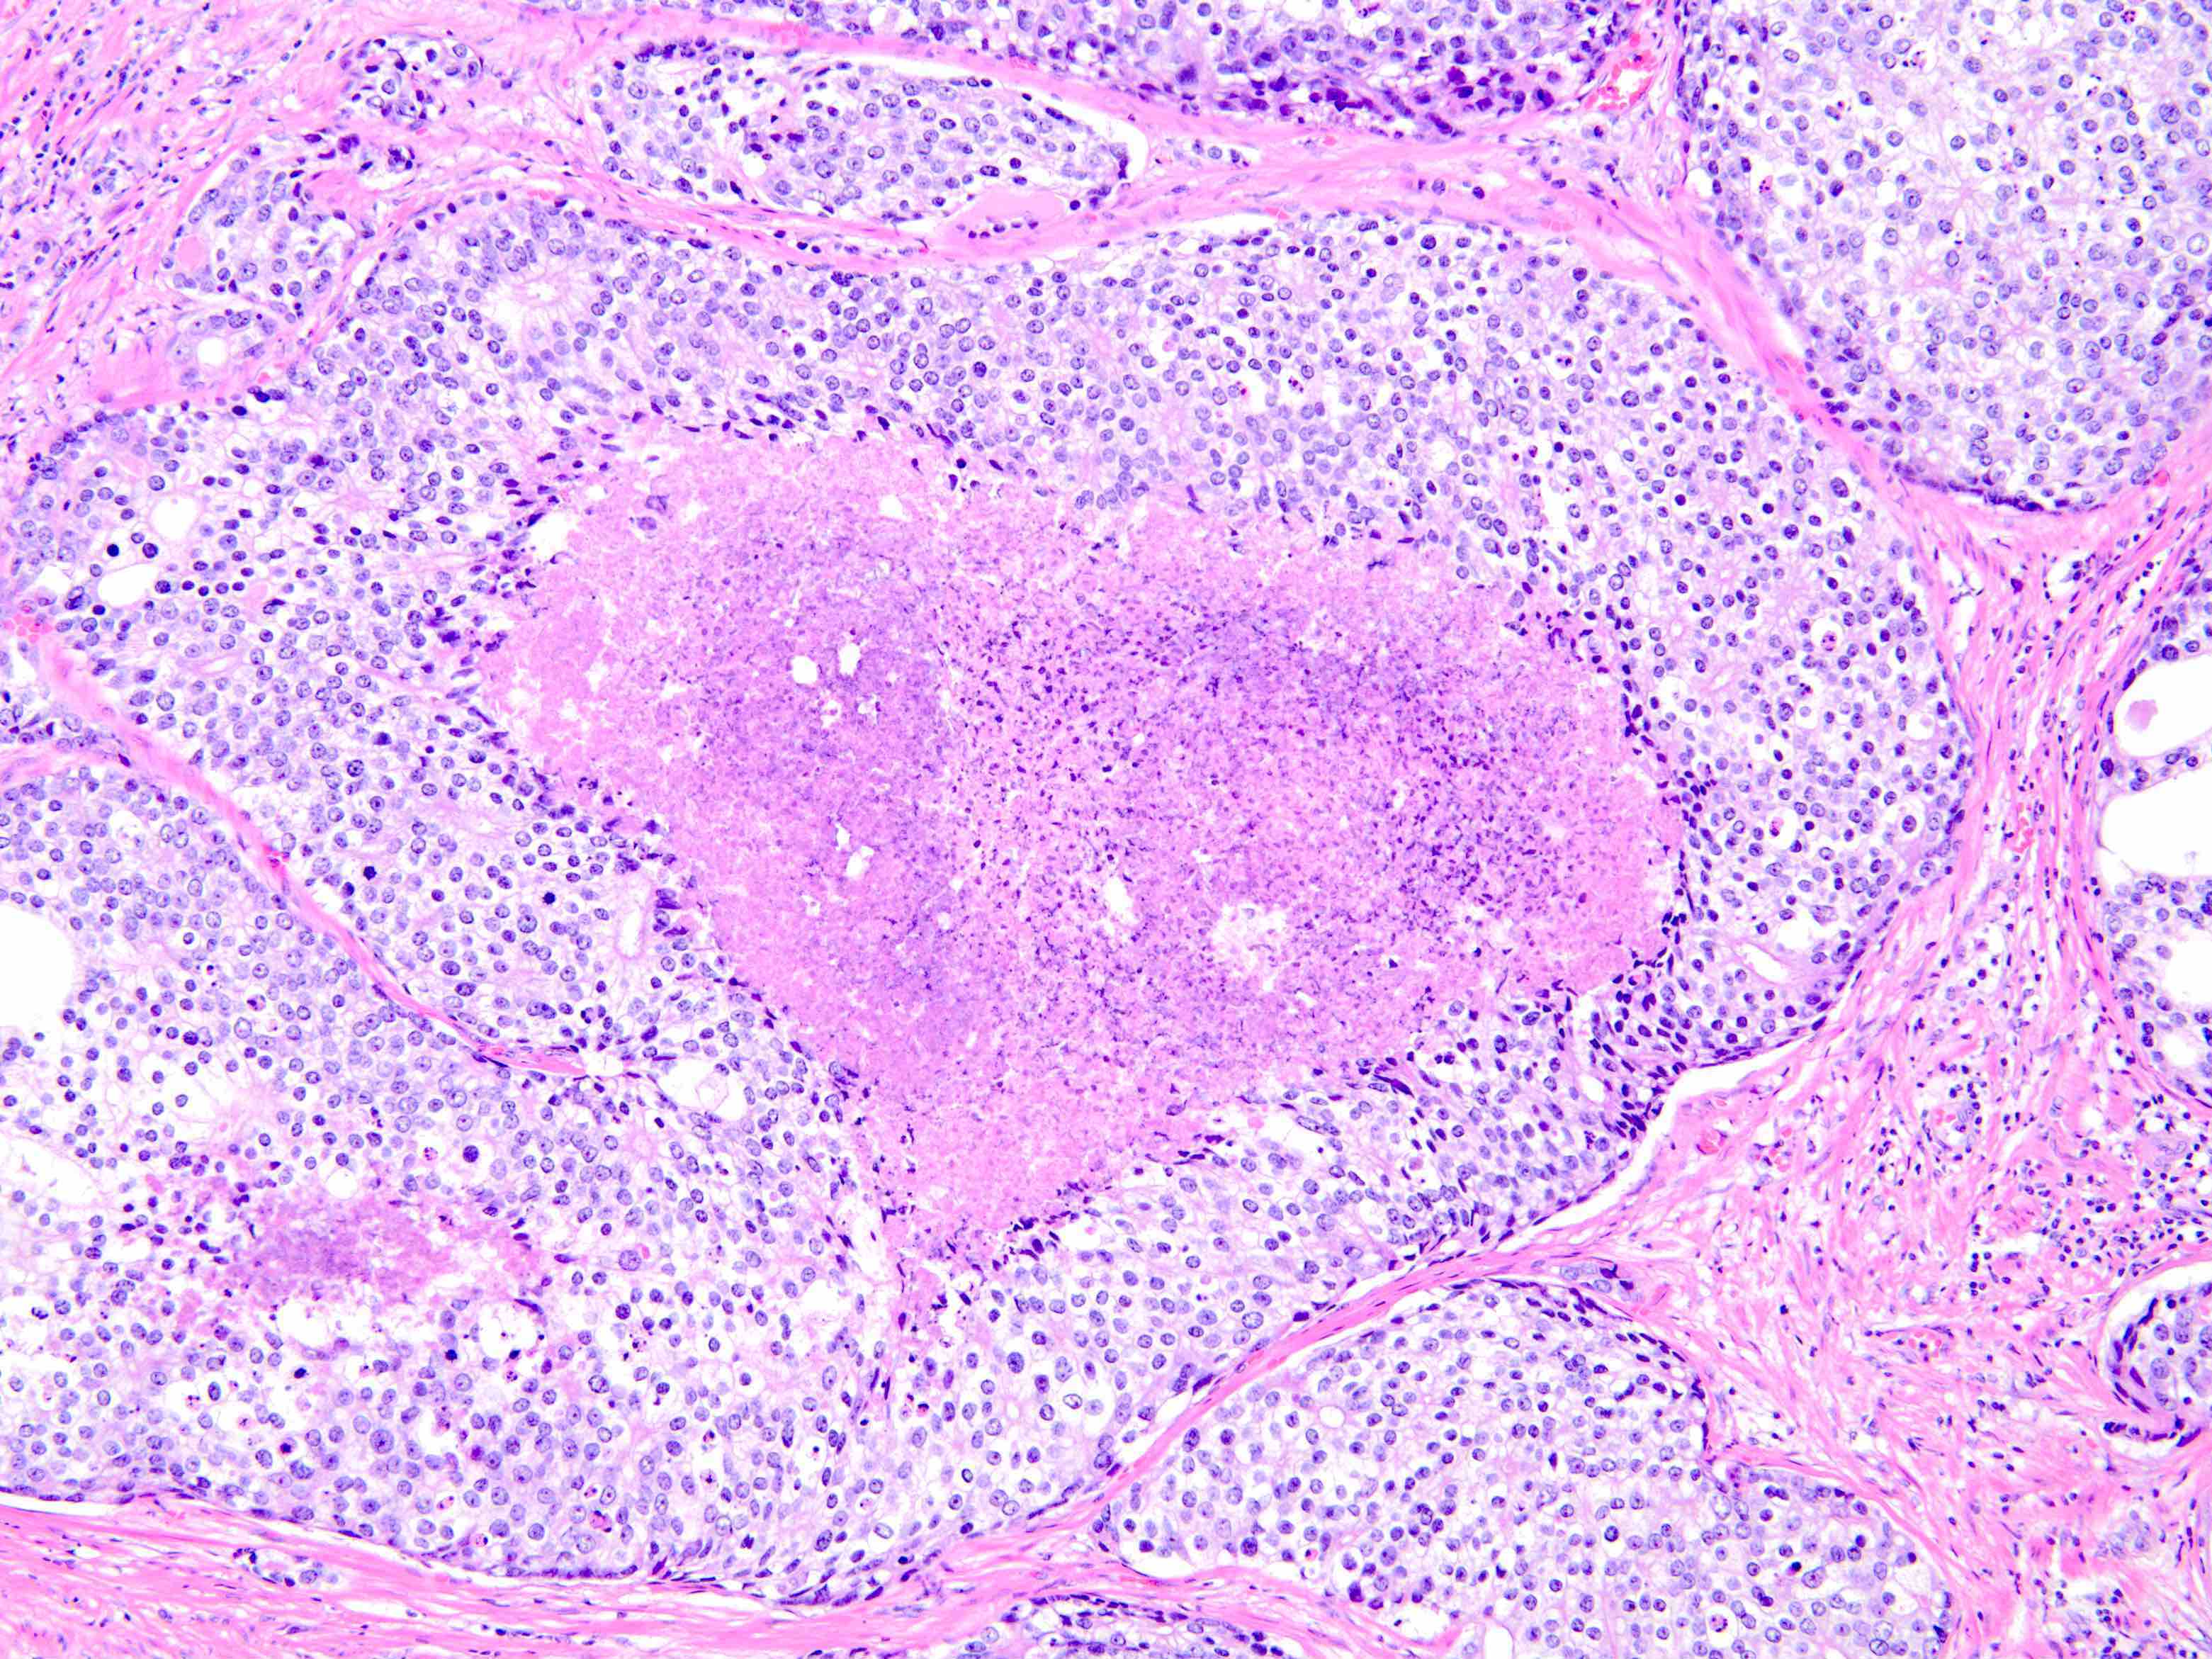 Gastric cancer pathology outlines